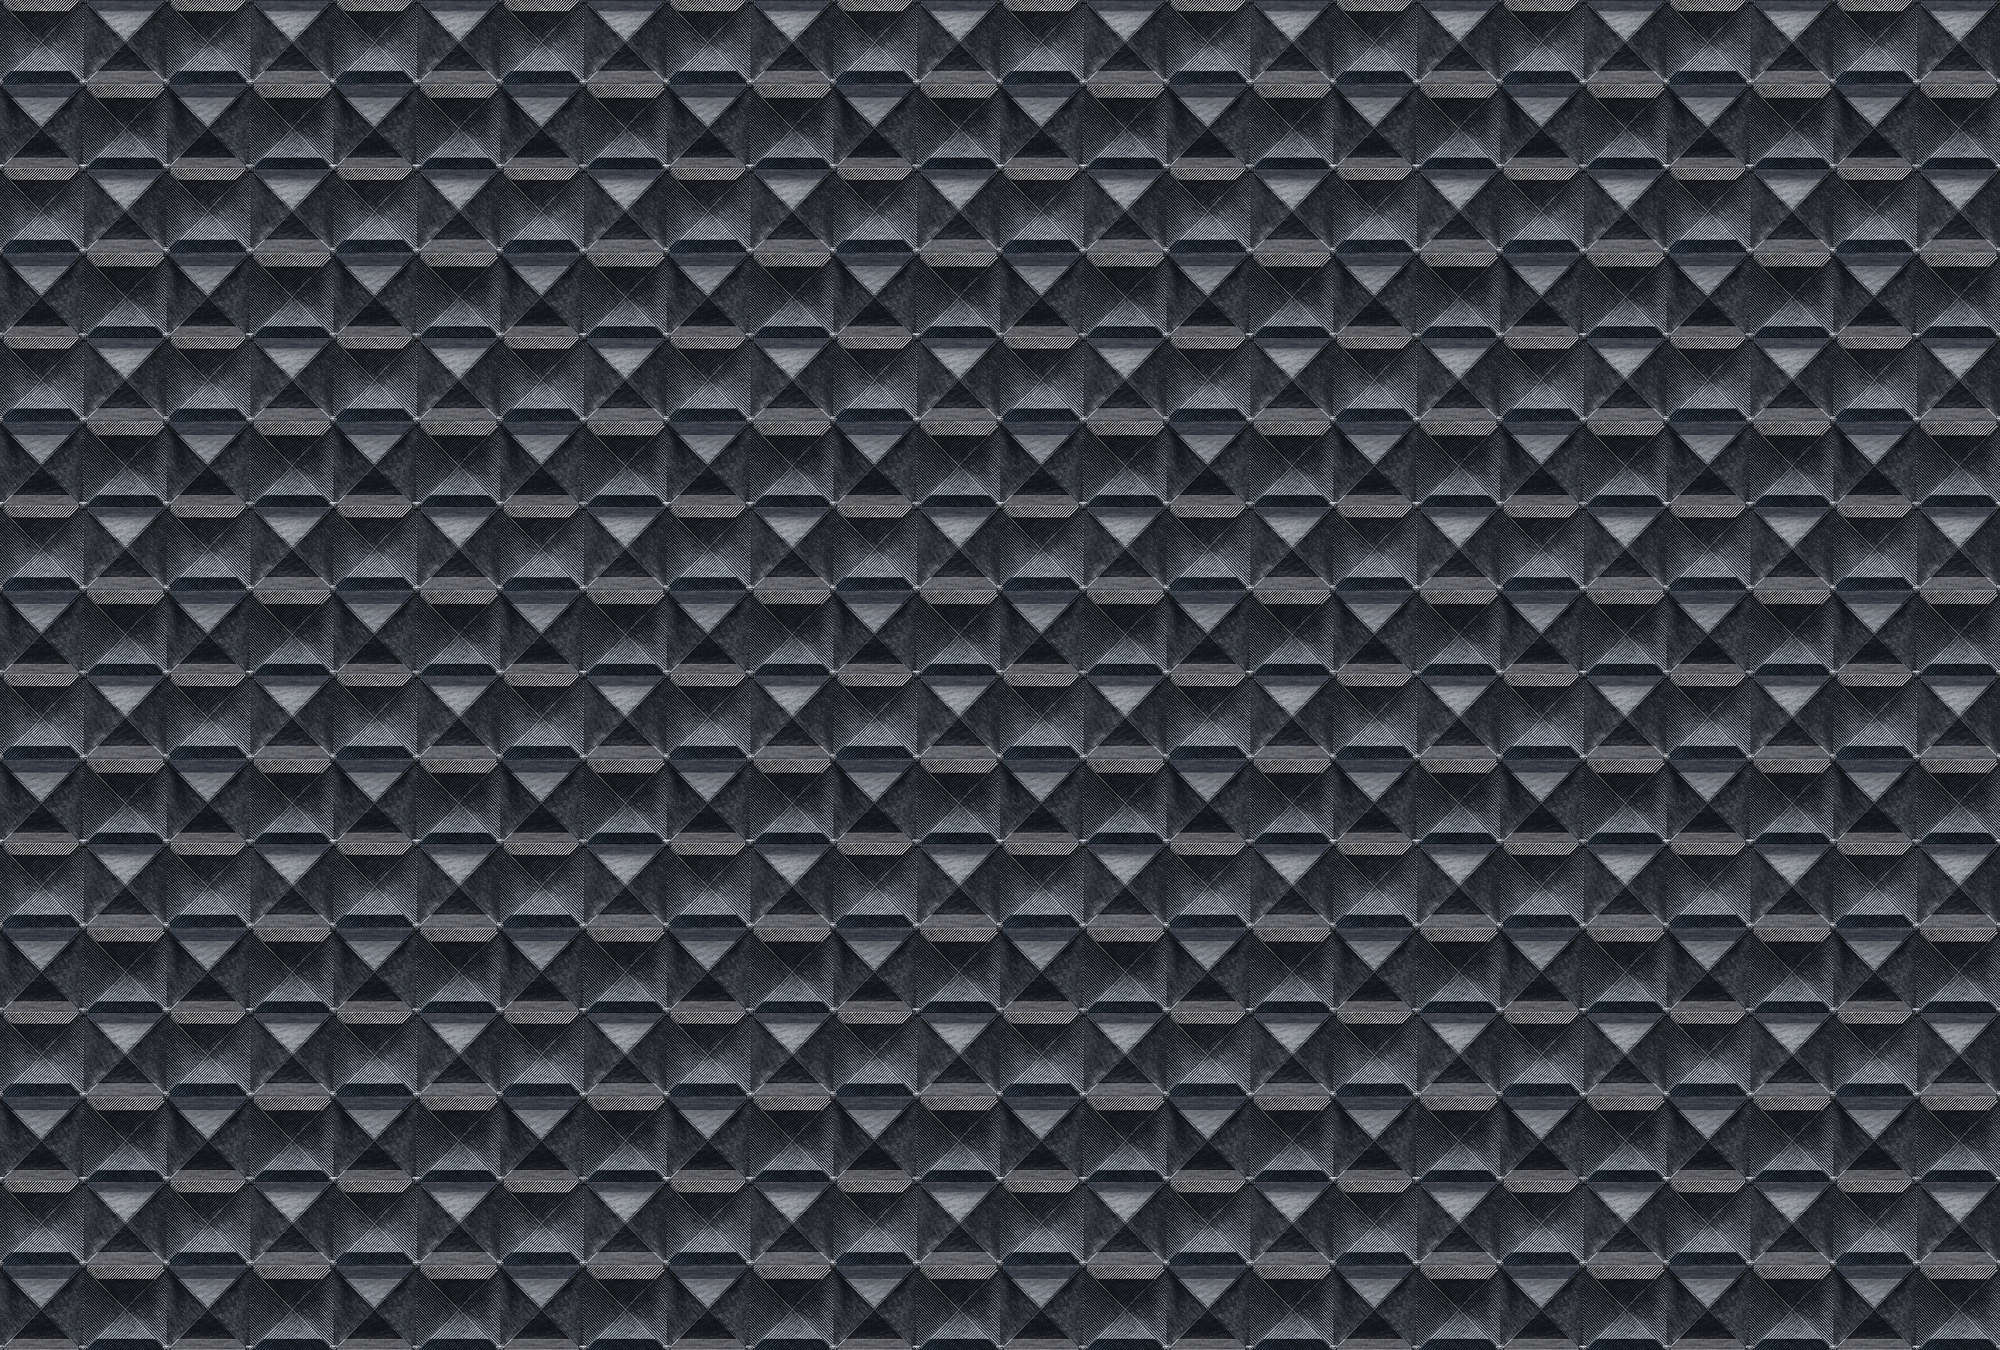             The edge 2 - 3D Photo wallpaper with lozenge metal design - Blue, Black | Matt smooth fleece
        